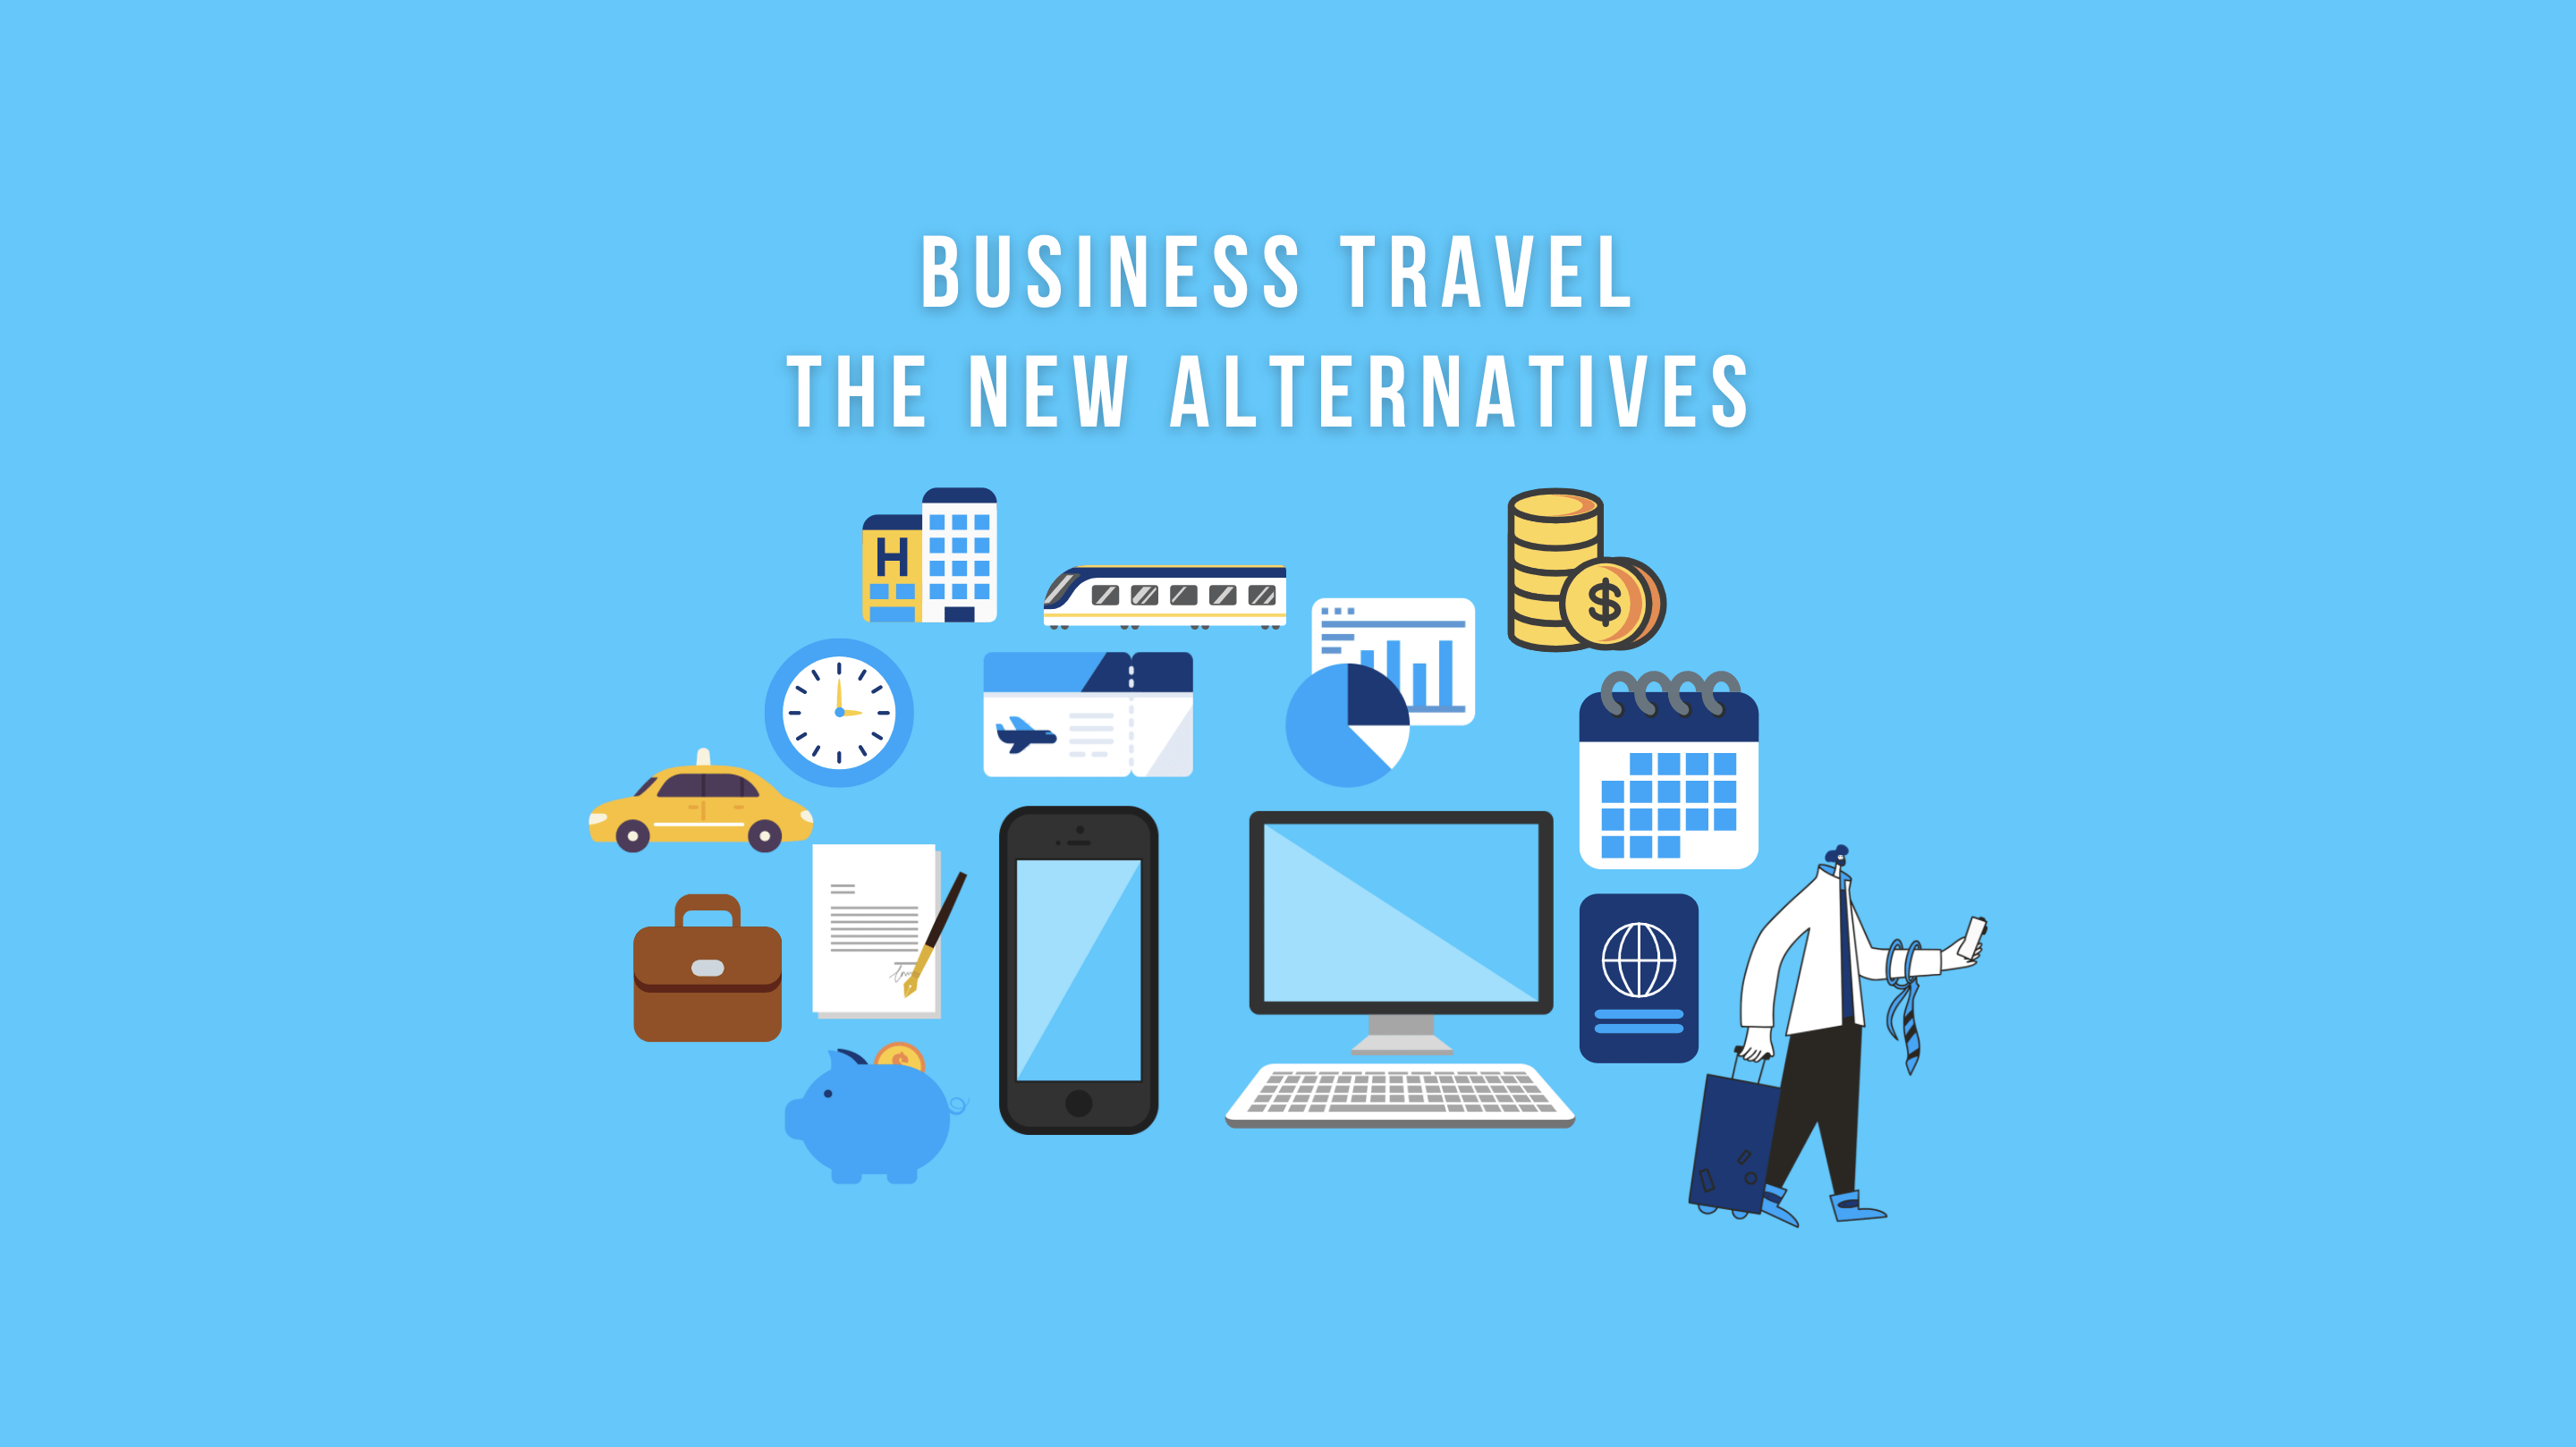 Organizing business travel the alternatives